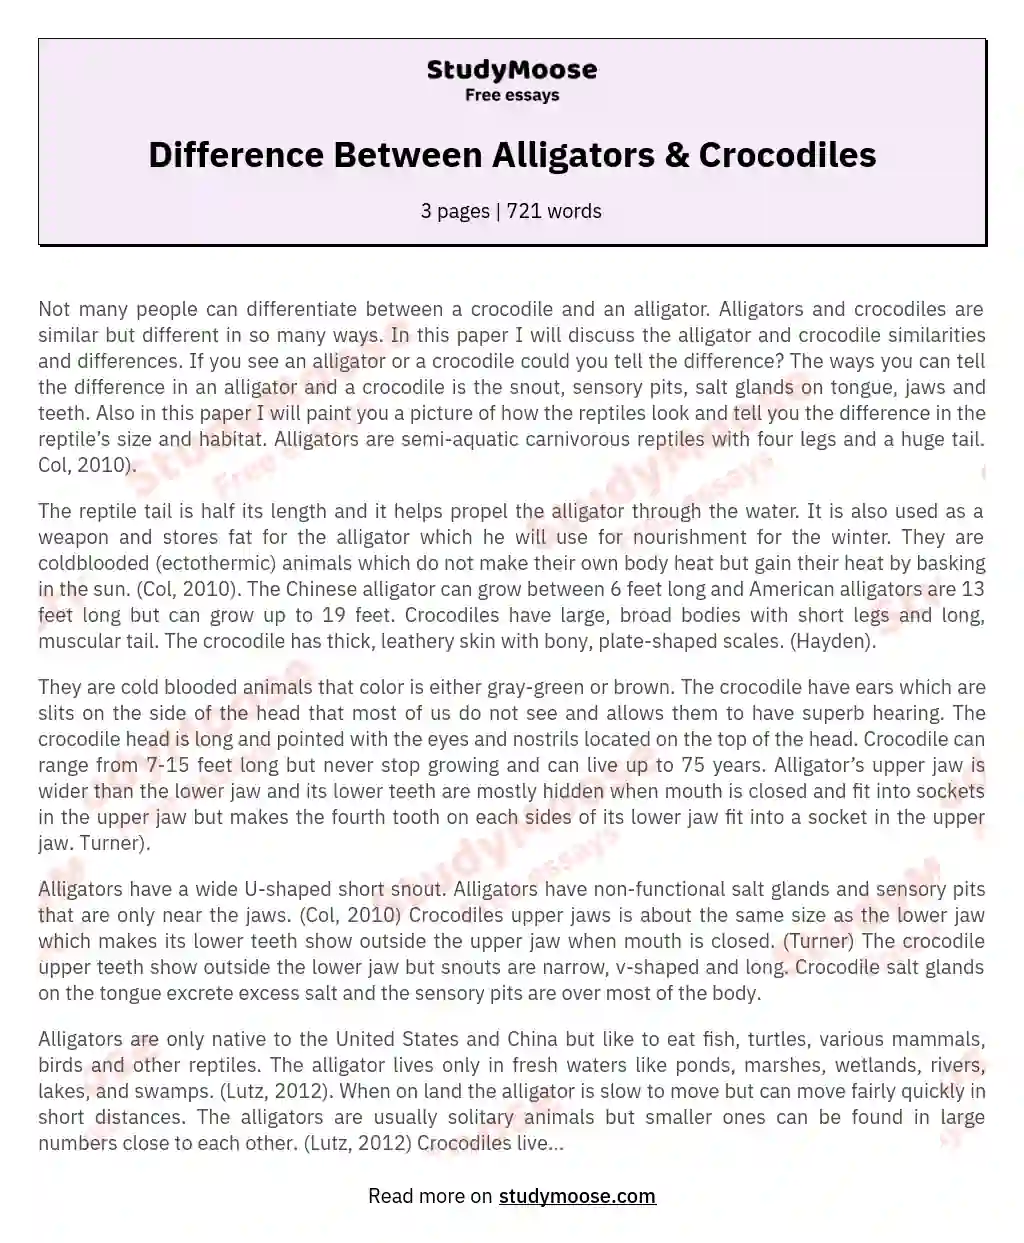 Difference Between Alligators & Crocodiles essay